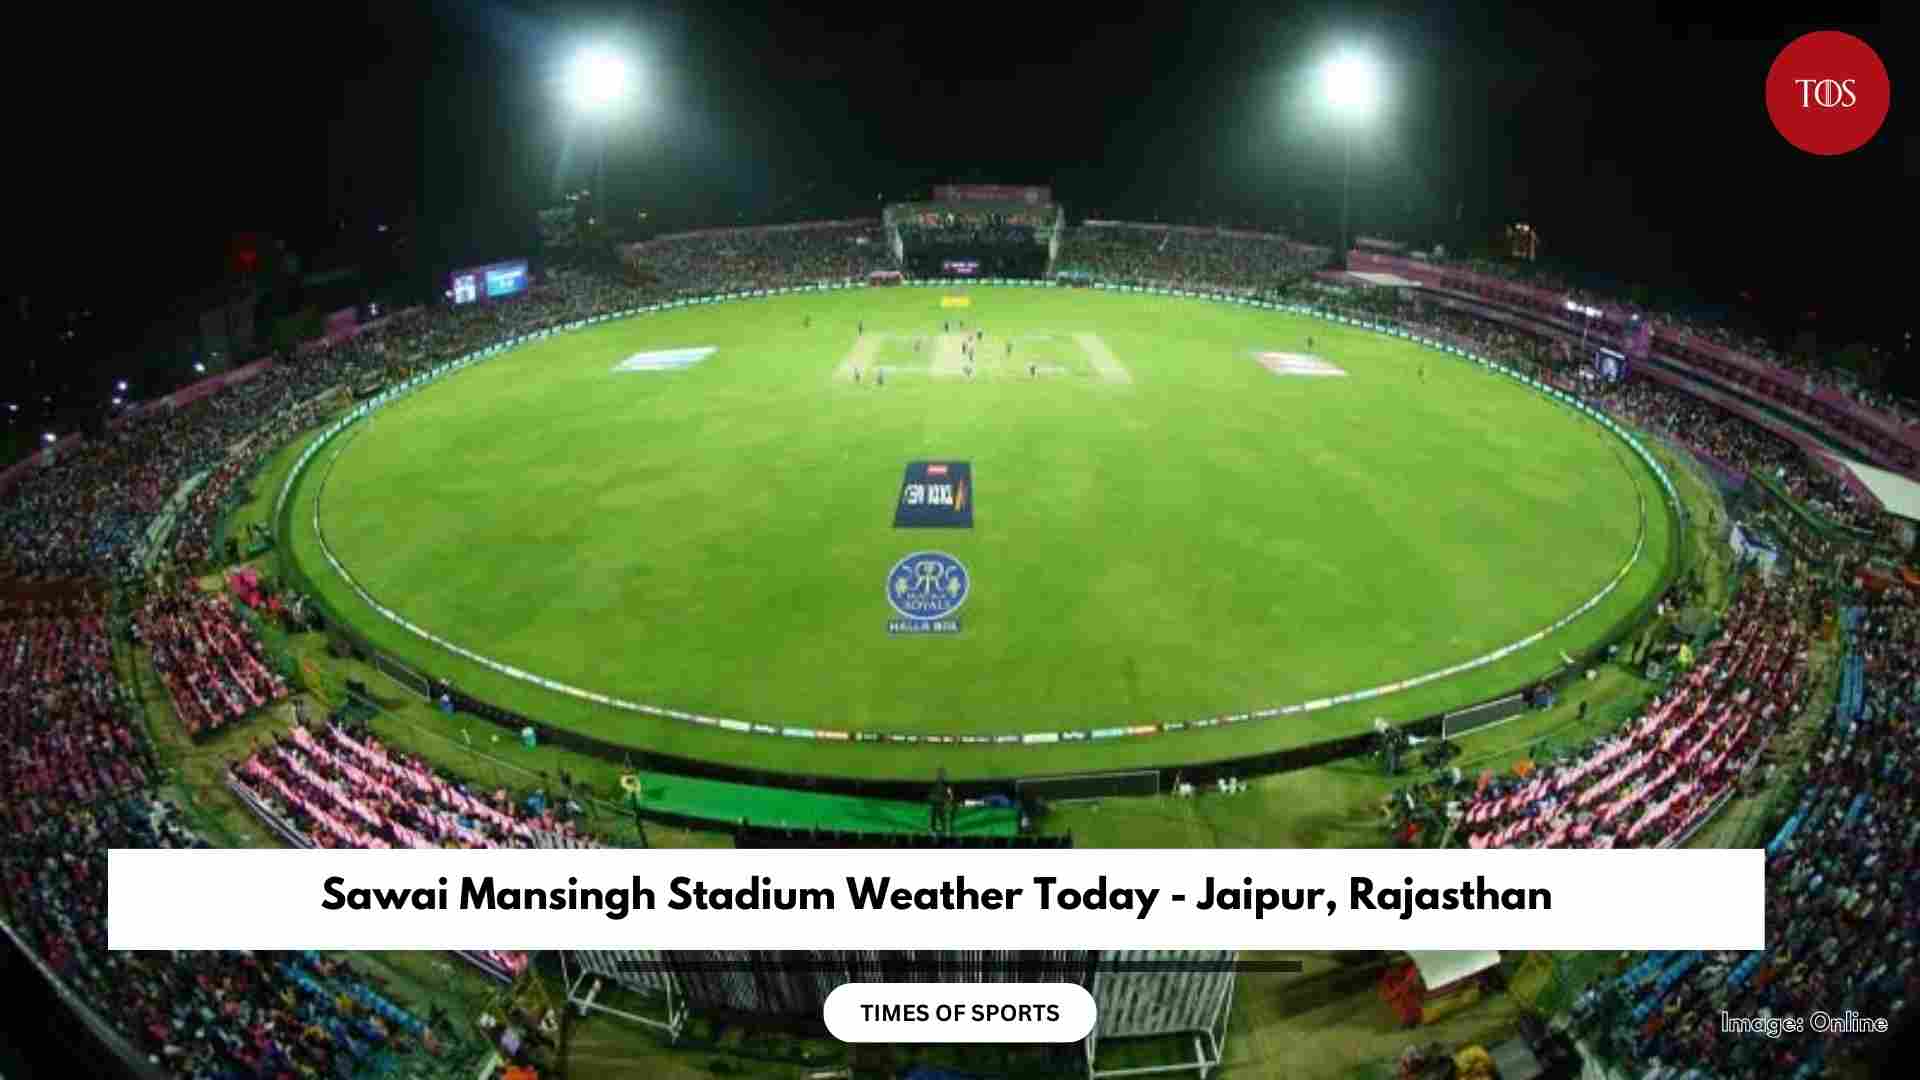 Sawai Mansingh Stadium Weather Today